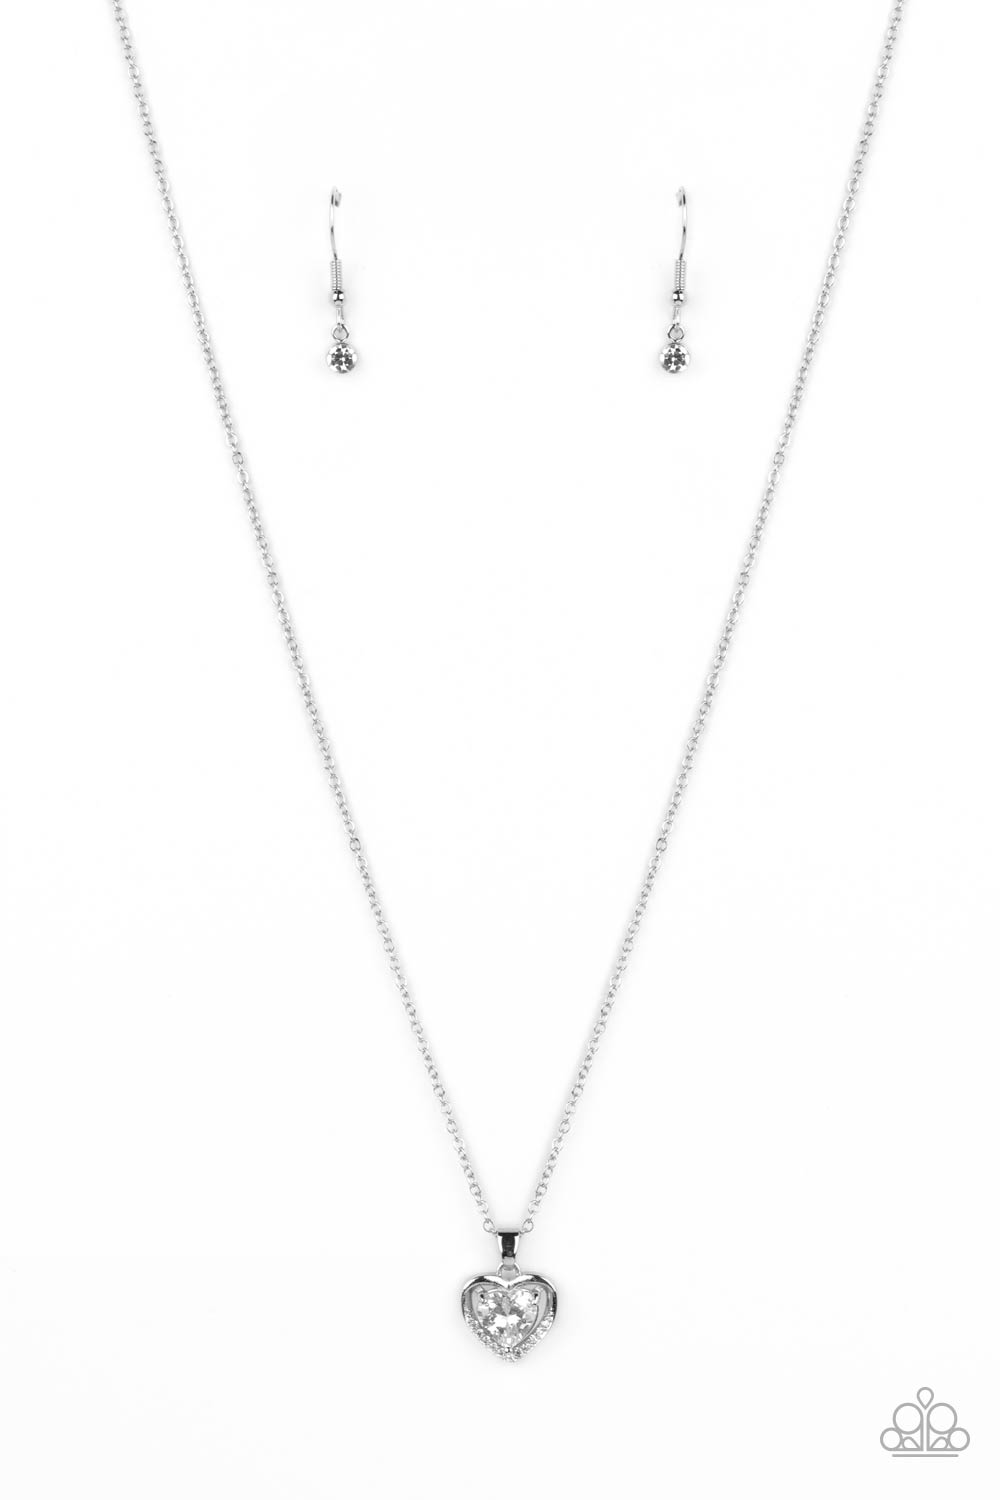 Effulgently Engaged White Rhinestone Heart Necklace - Paparazzi Accessories- lightbox - CarasShop.com - $5 Jewelry by Cara Jewels